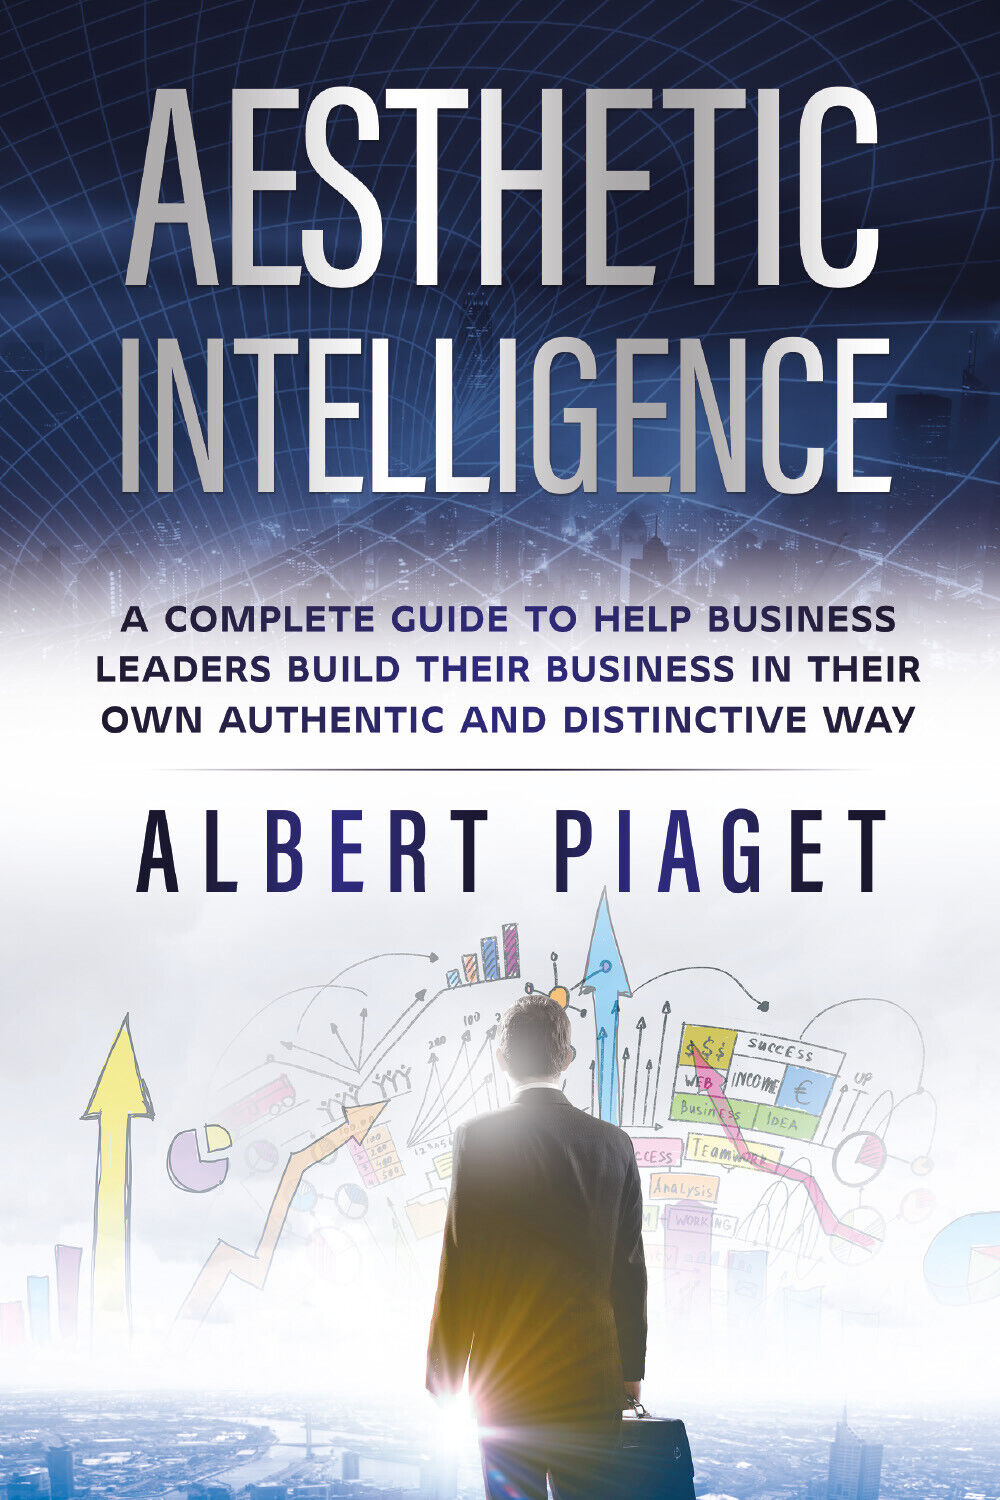 Aesthetic intelligence di Albert Piaget,  2021,  Youcanprint